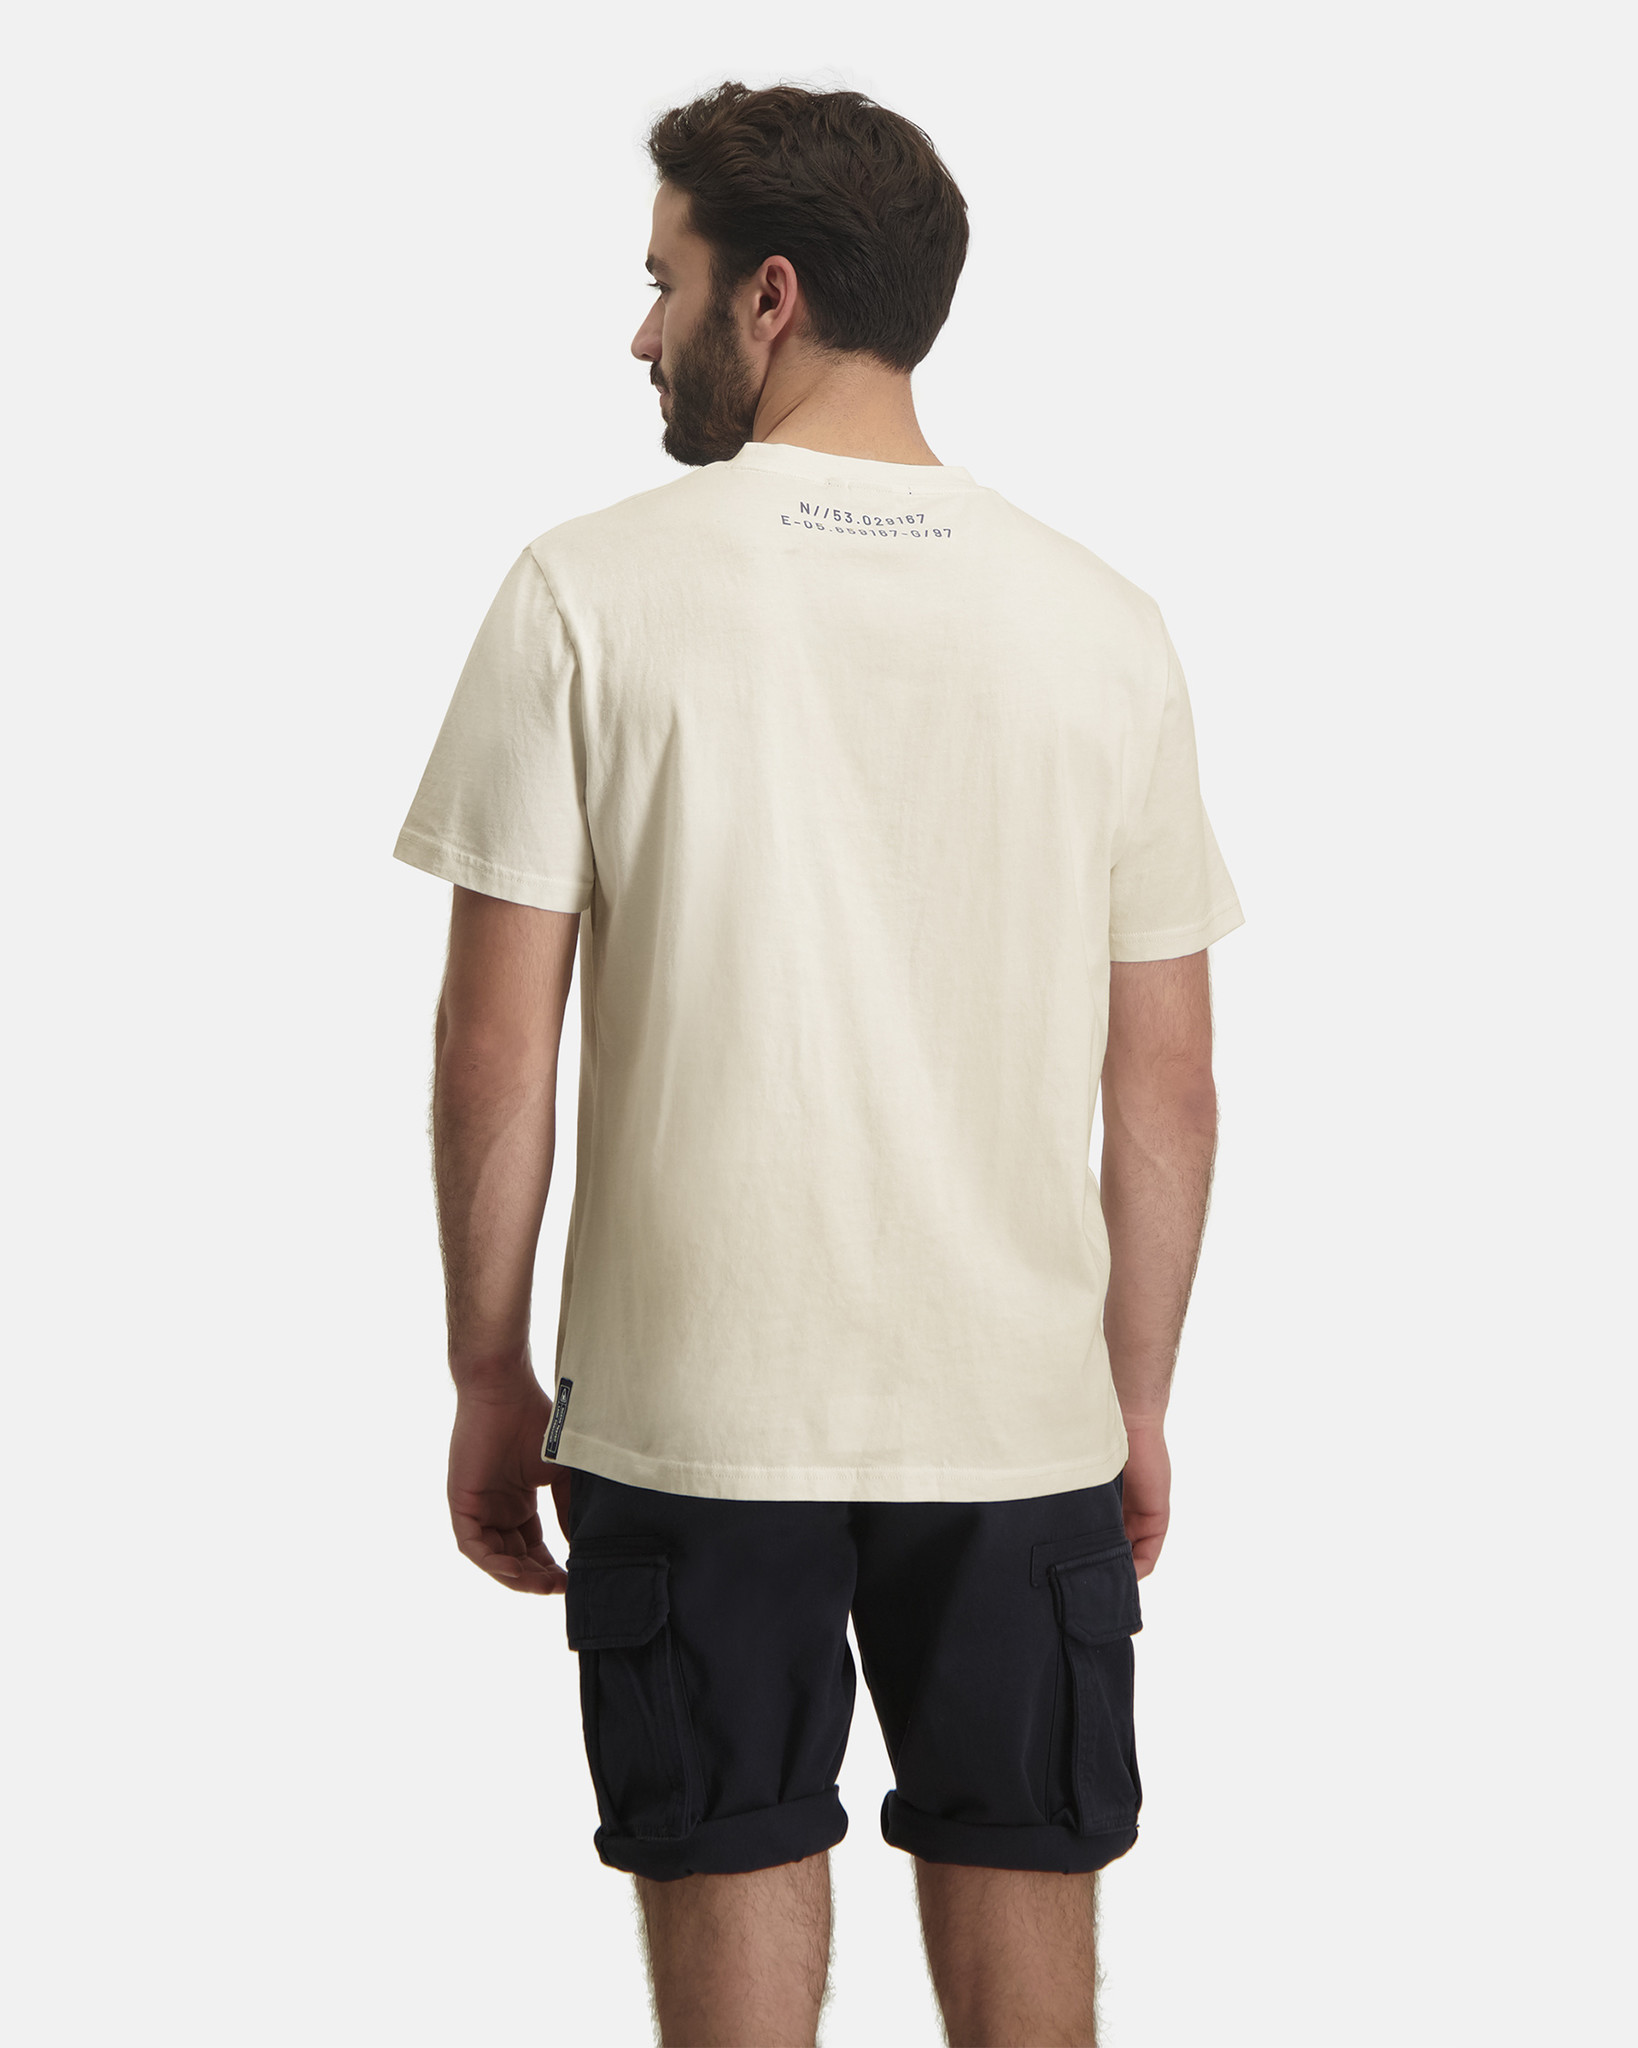 Mike-T-Shirt aus 100% Baumwolle